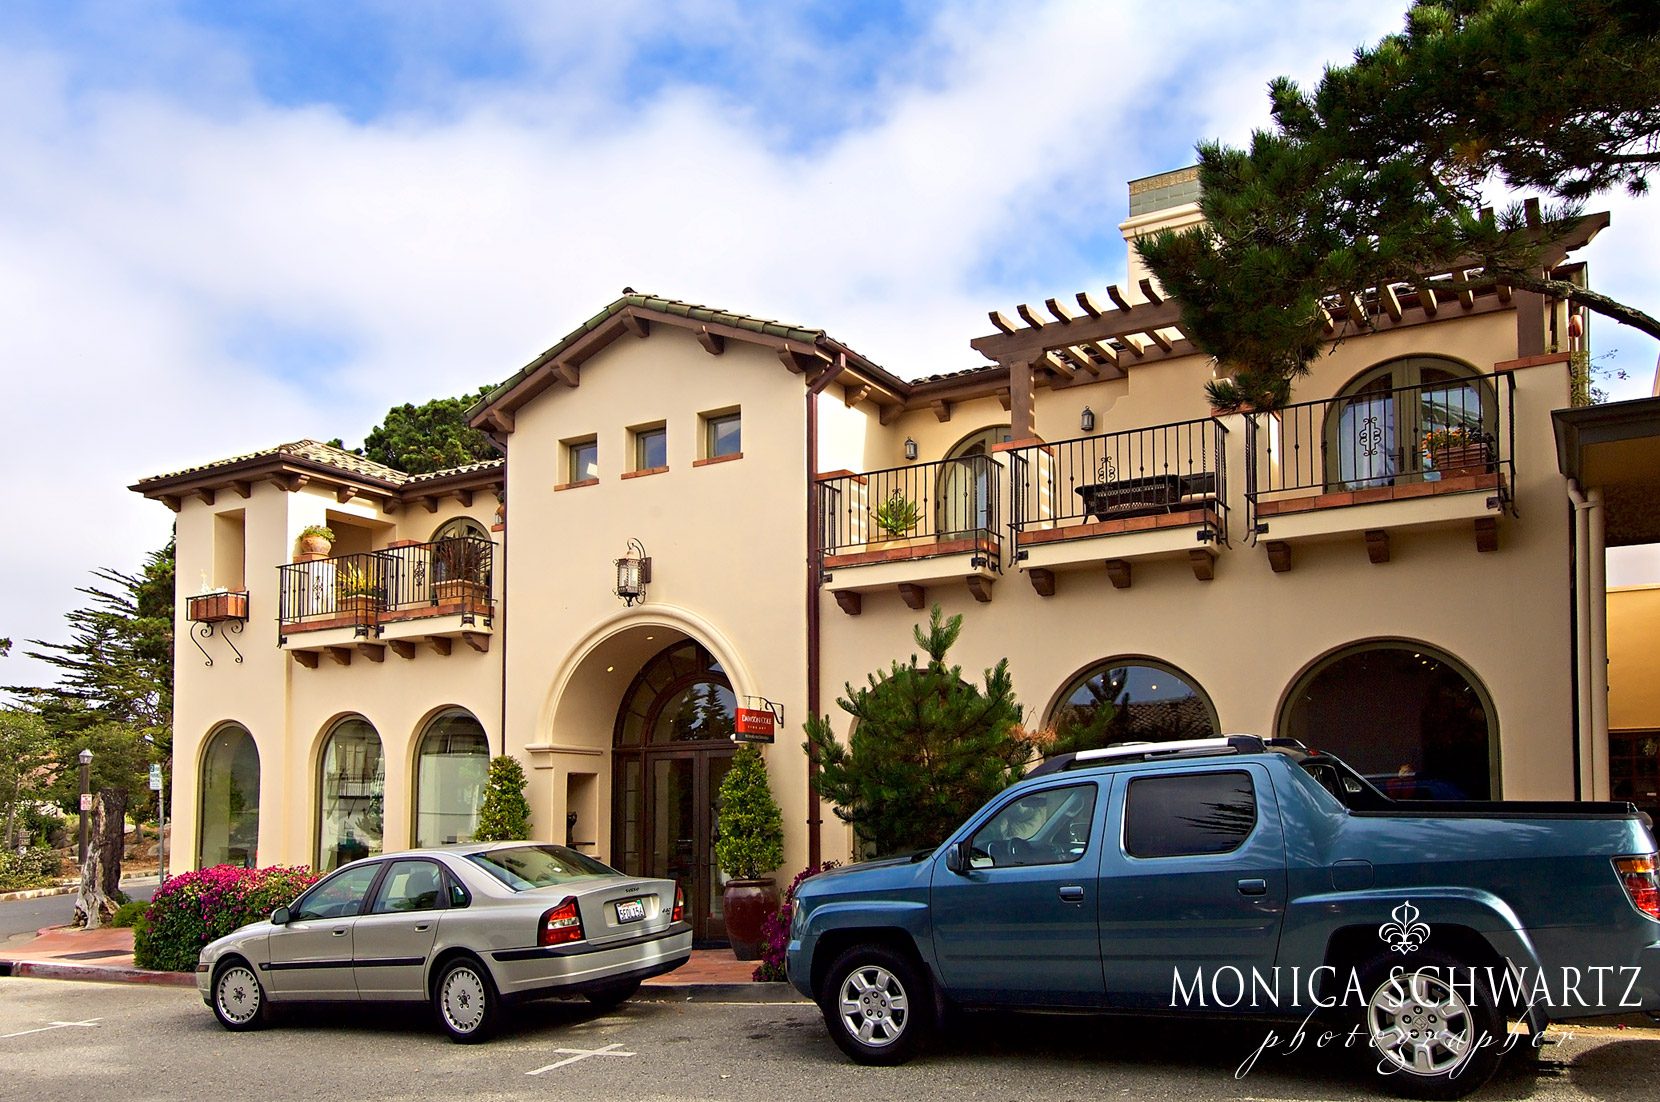 Pretty-hispanic-style-building-in-Carmel-by-the-Sea-California